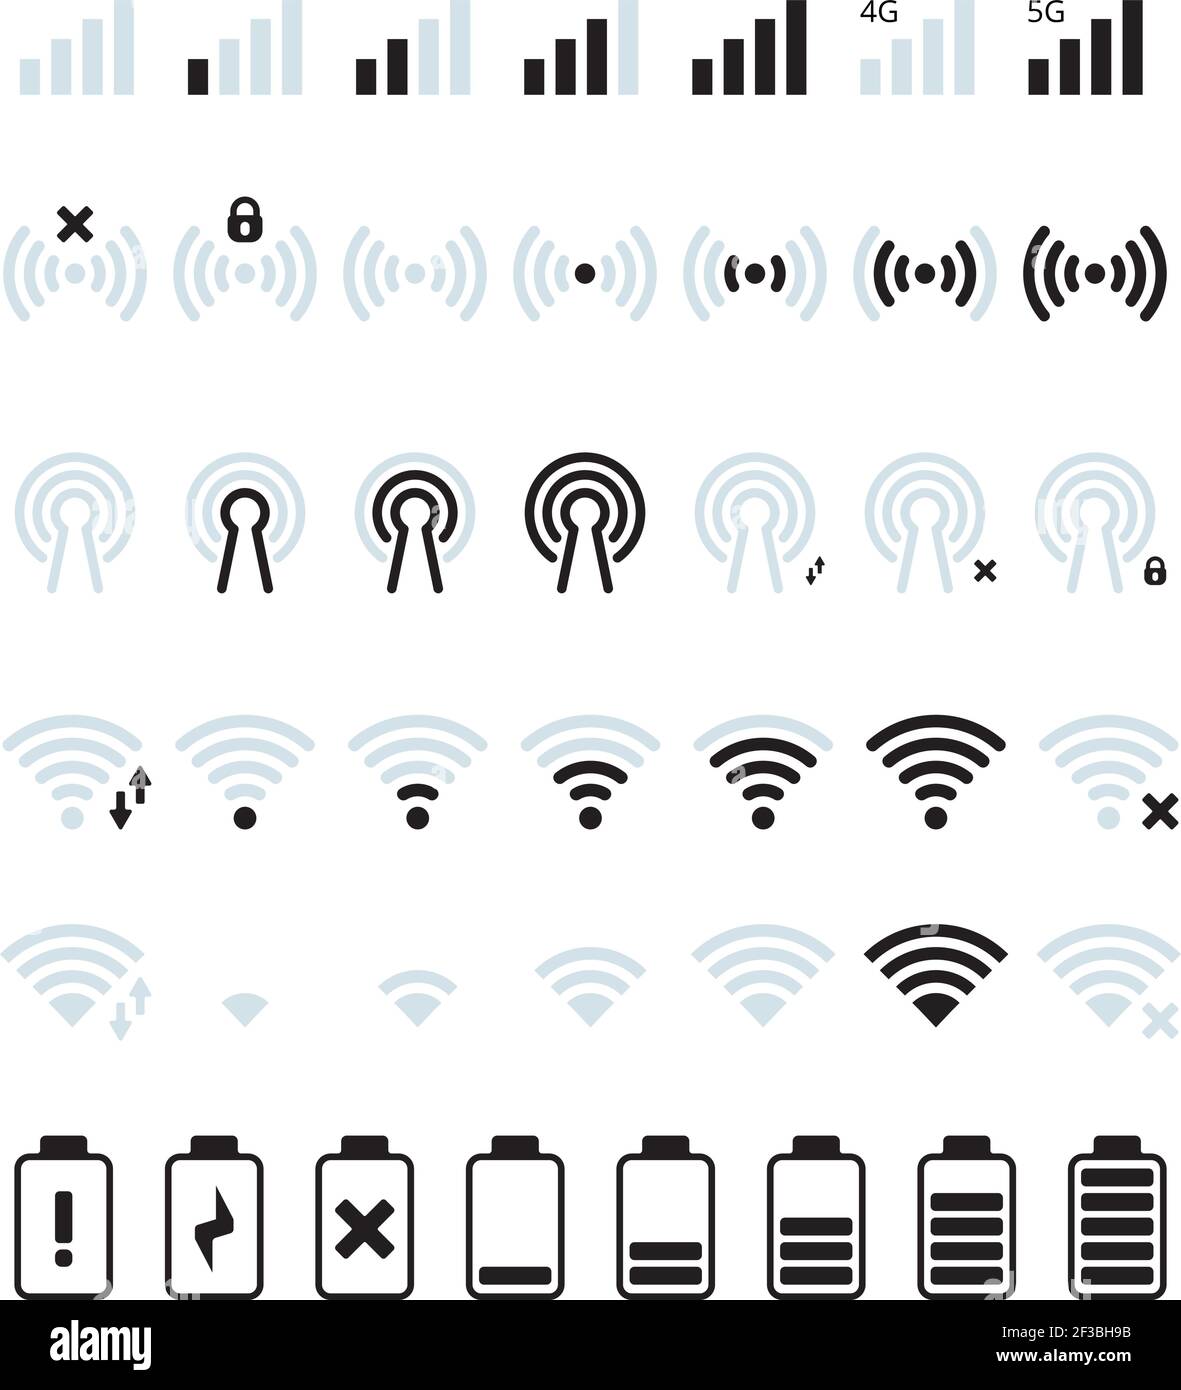 arrows wifi signal bars